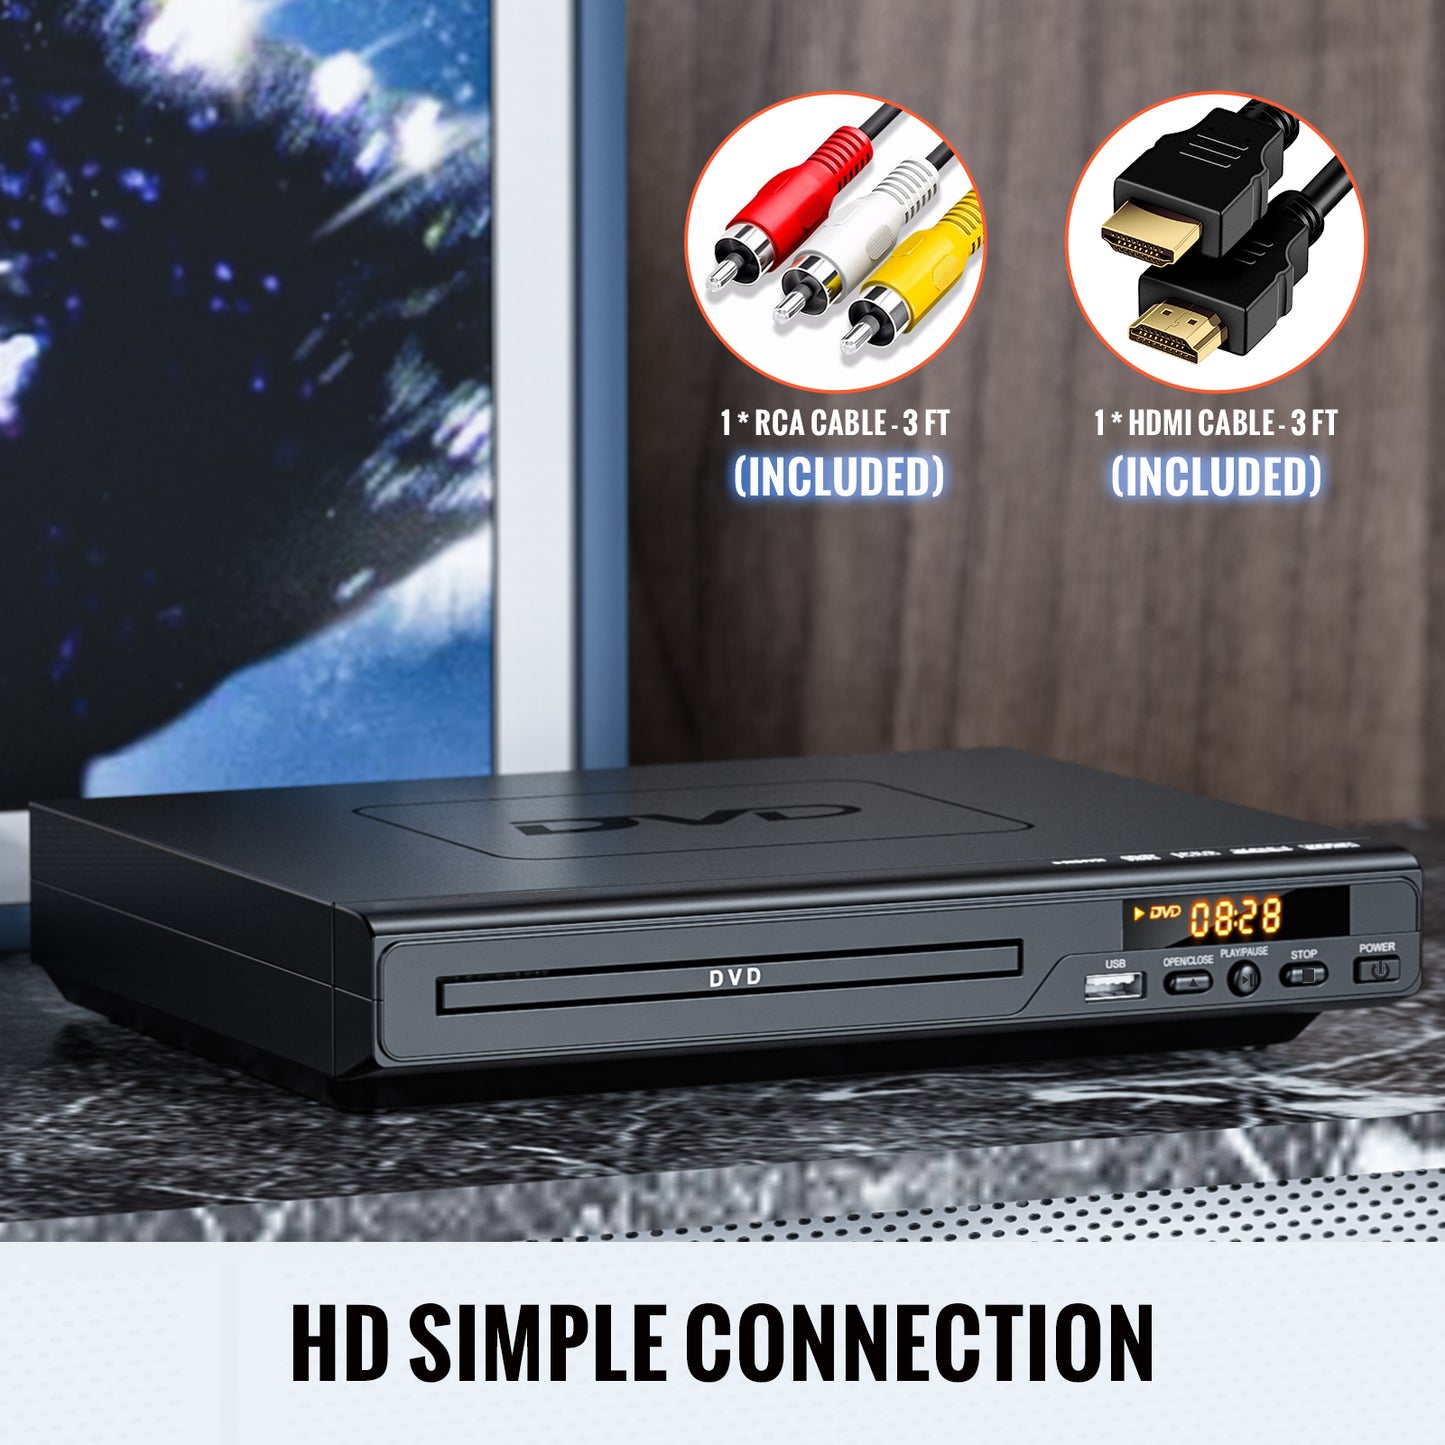 ELECTCOM PRO HDMI DVD PLAYER UPGRADED